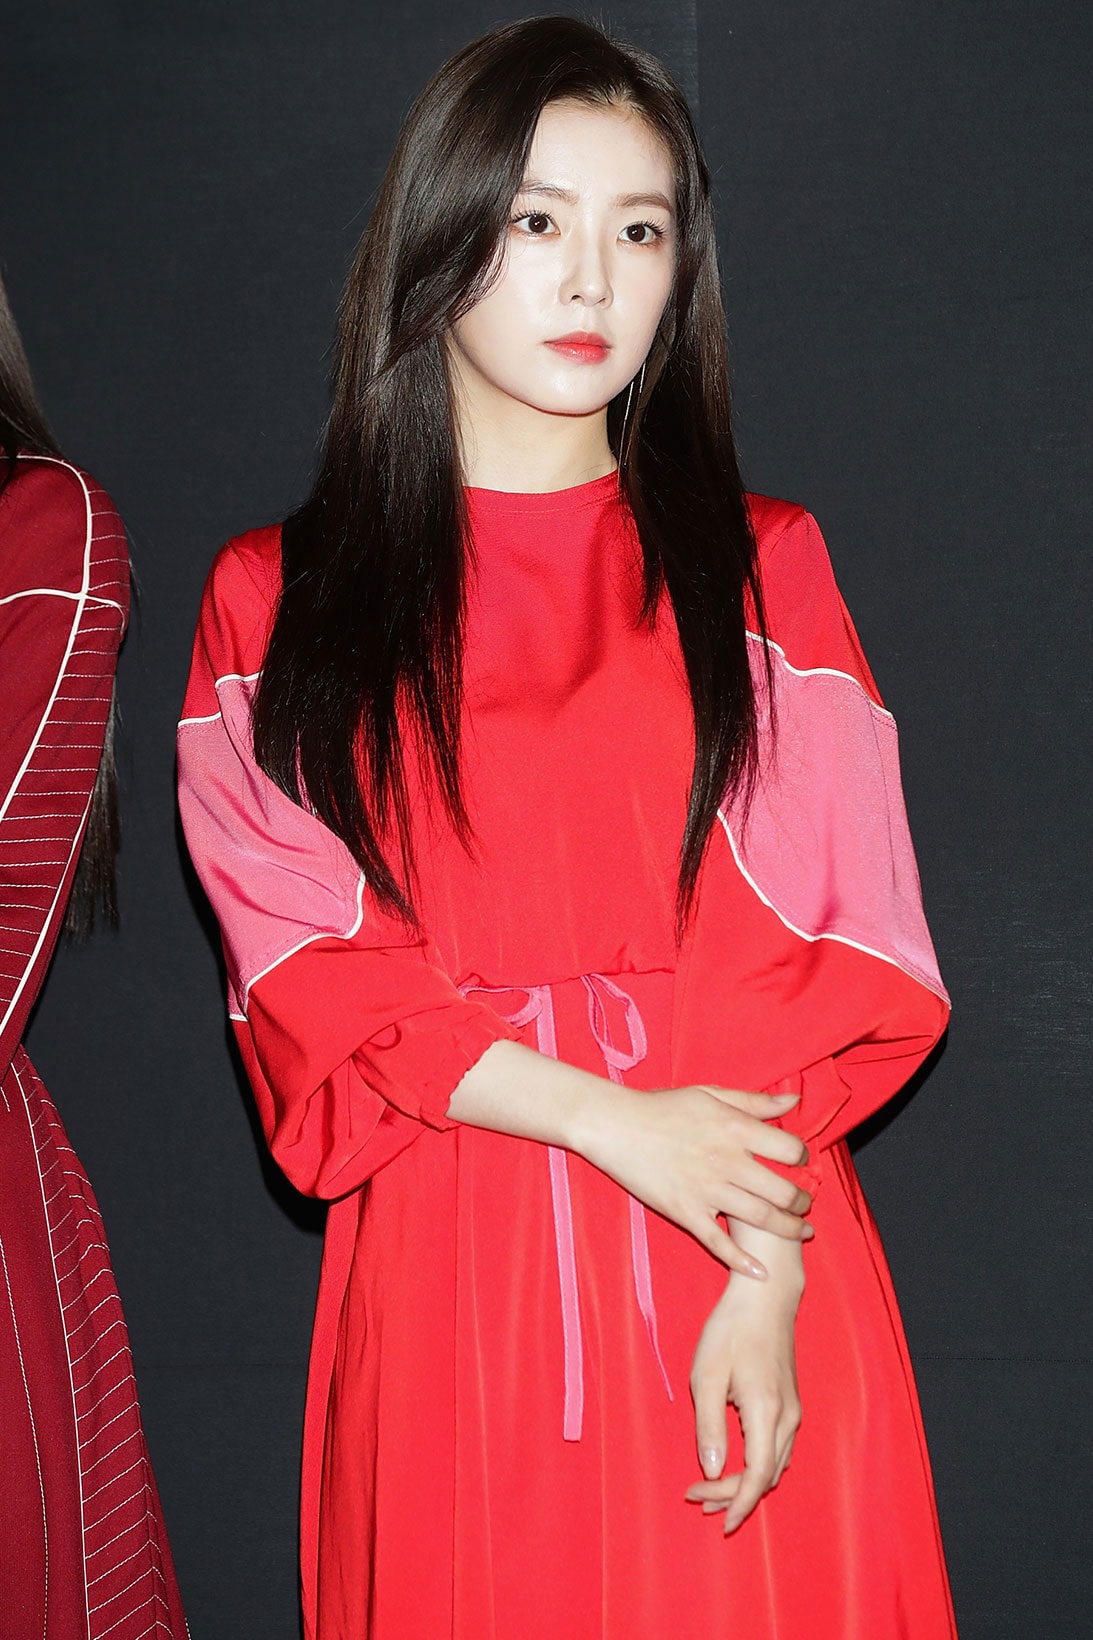 red velvet irene controversy mistreatment fashion editor photoshoot apology statement gapjil explained k-pop